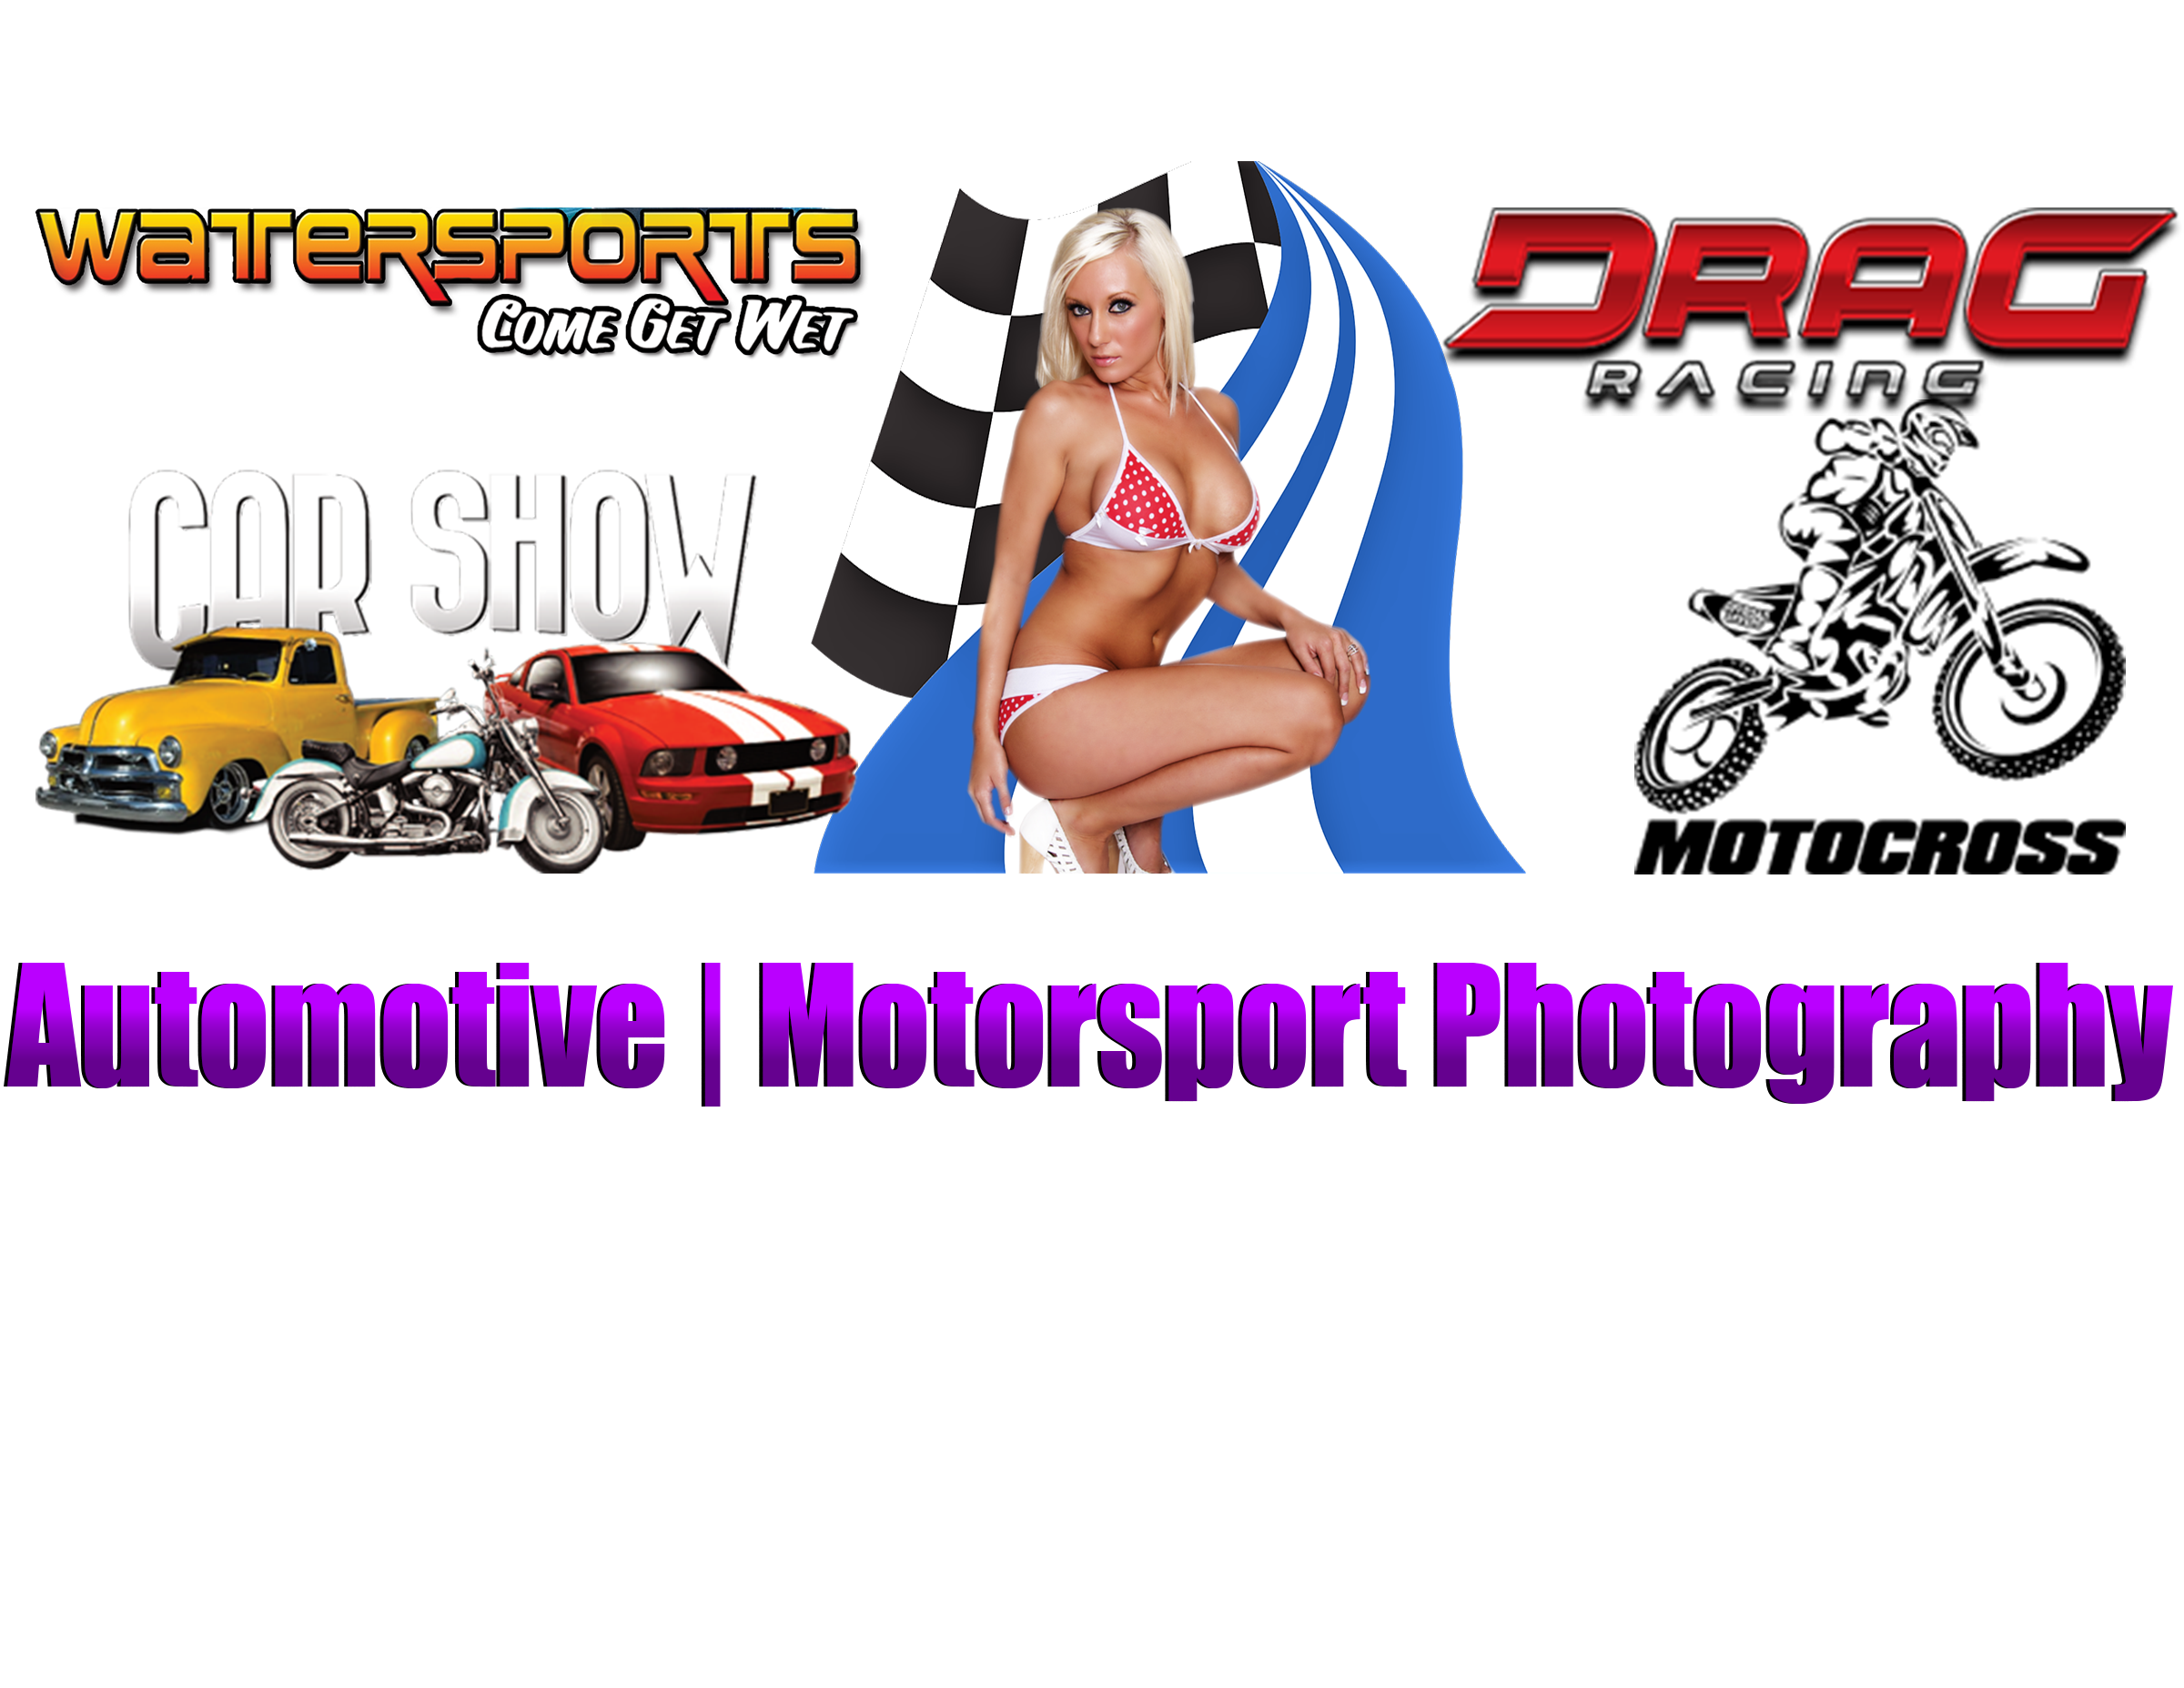 Automotive Motorsport Photography